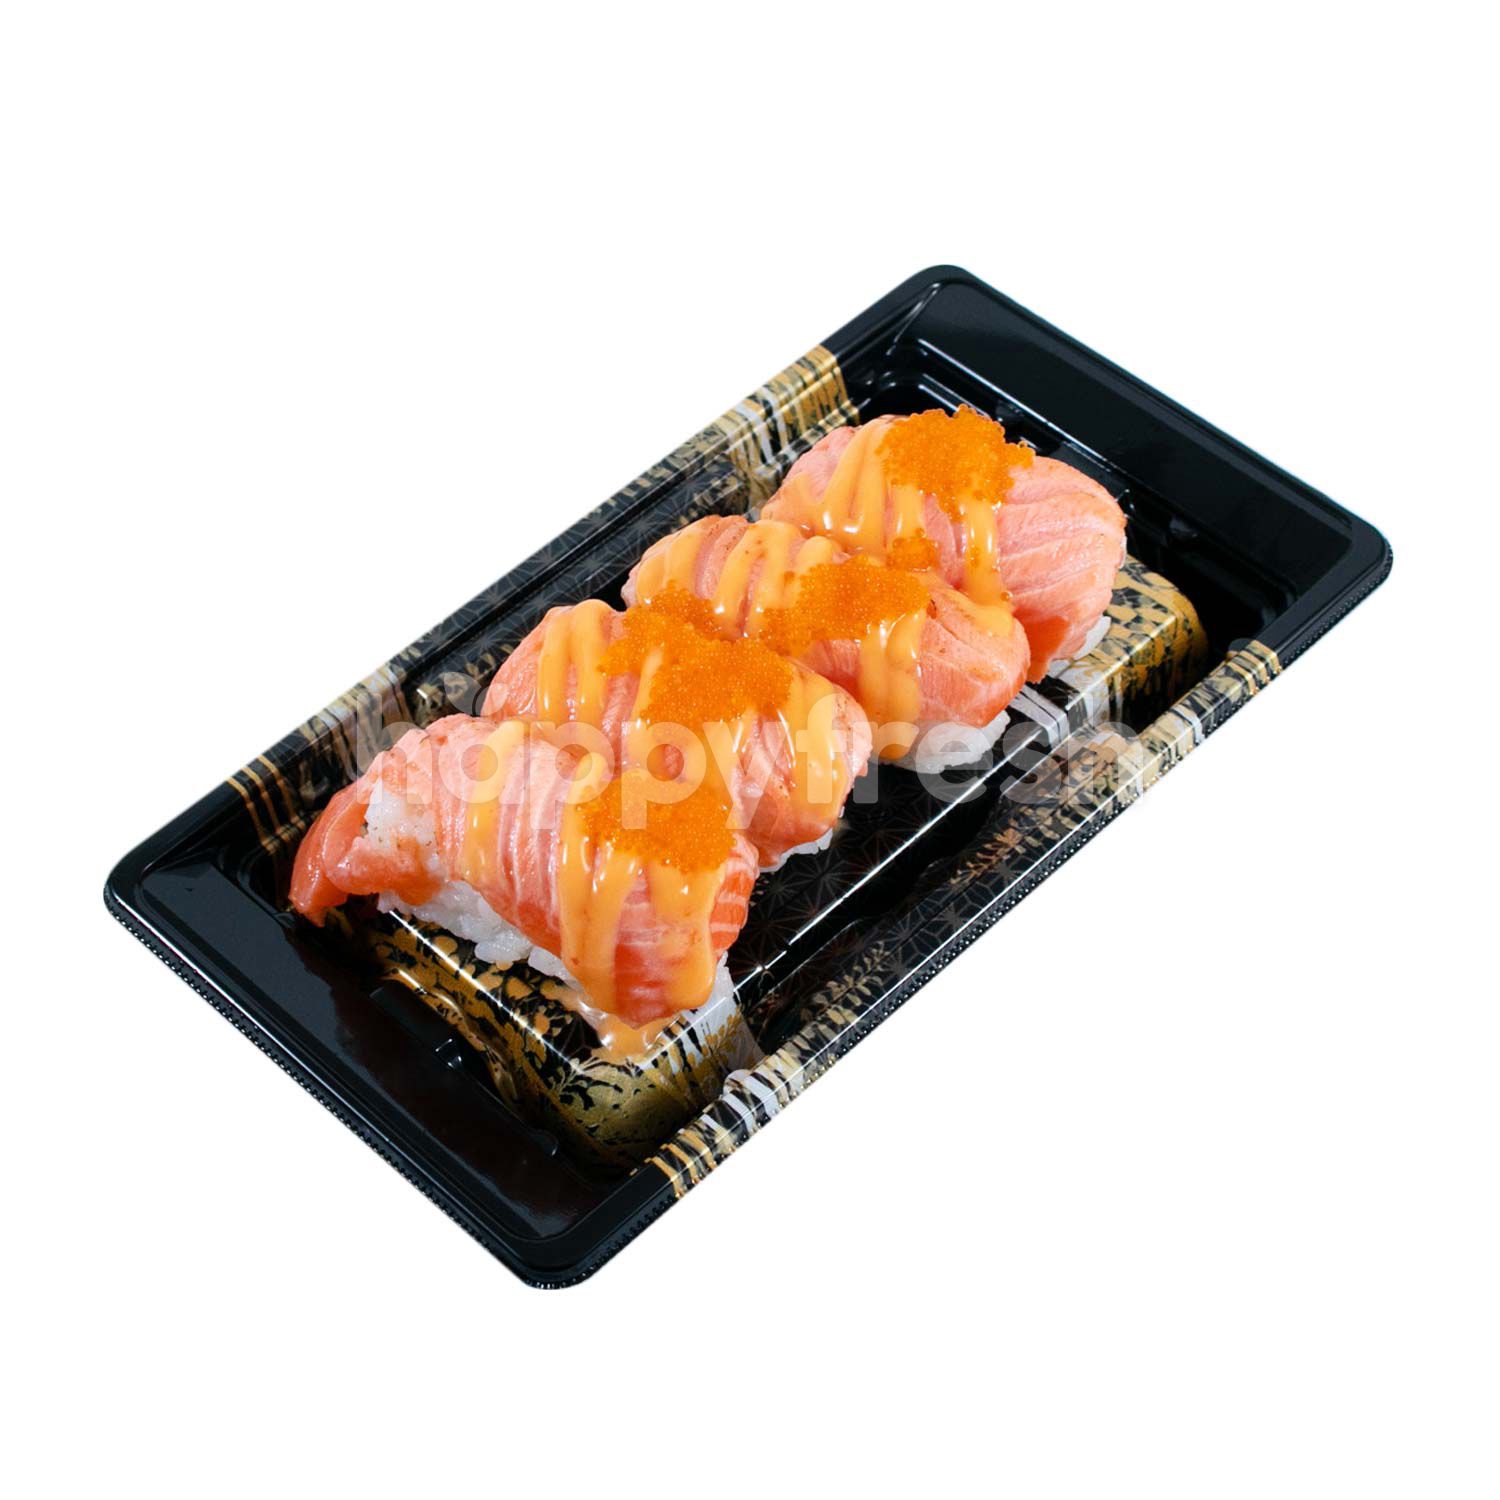 Spicy aburi salmon nigiri